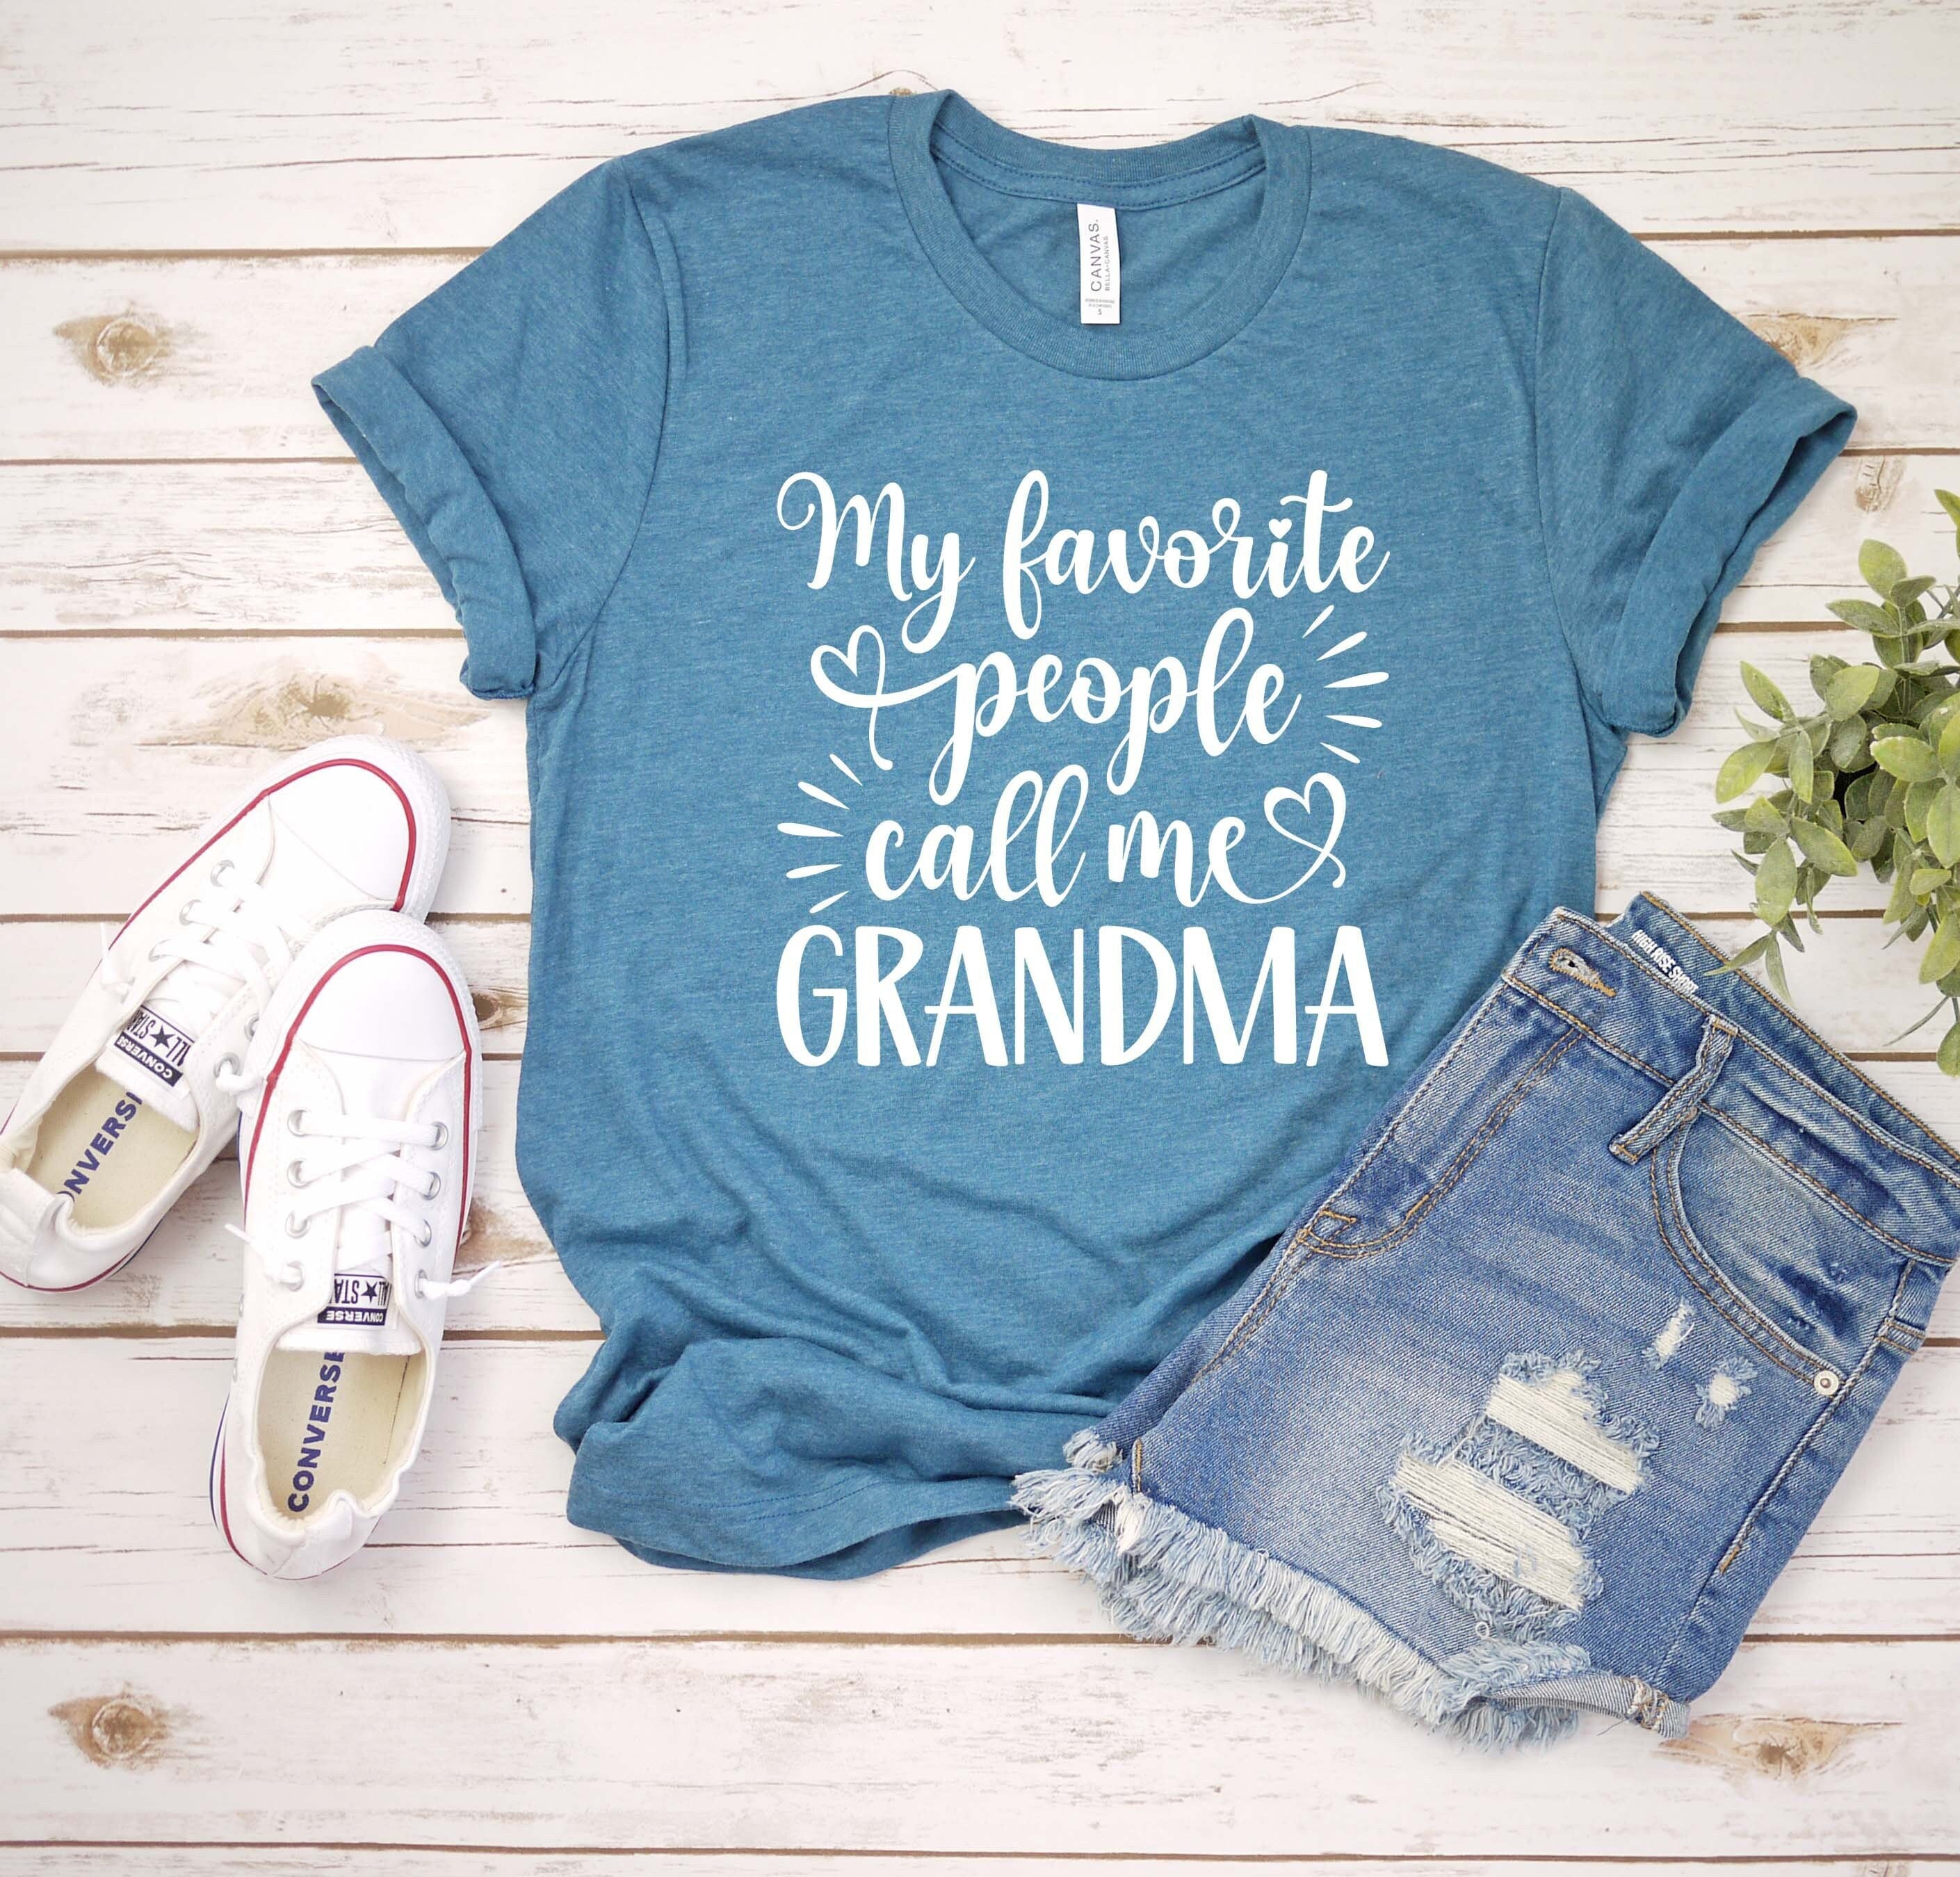 Grandma Gifts - Christmas Gifts for Grandma - Best Grandma Ever Mug -  Unique Birthday Mothers Day Gi…See more Grandma Gifts - Christmas Gifts for